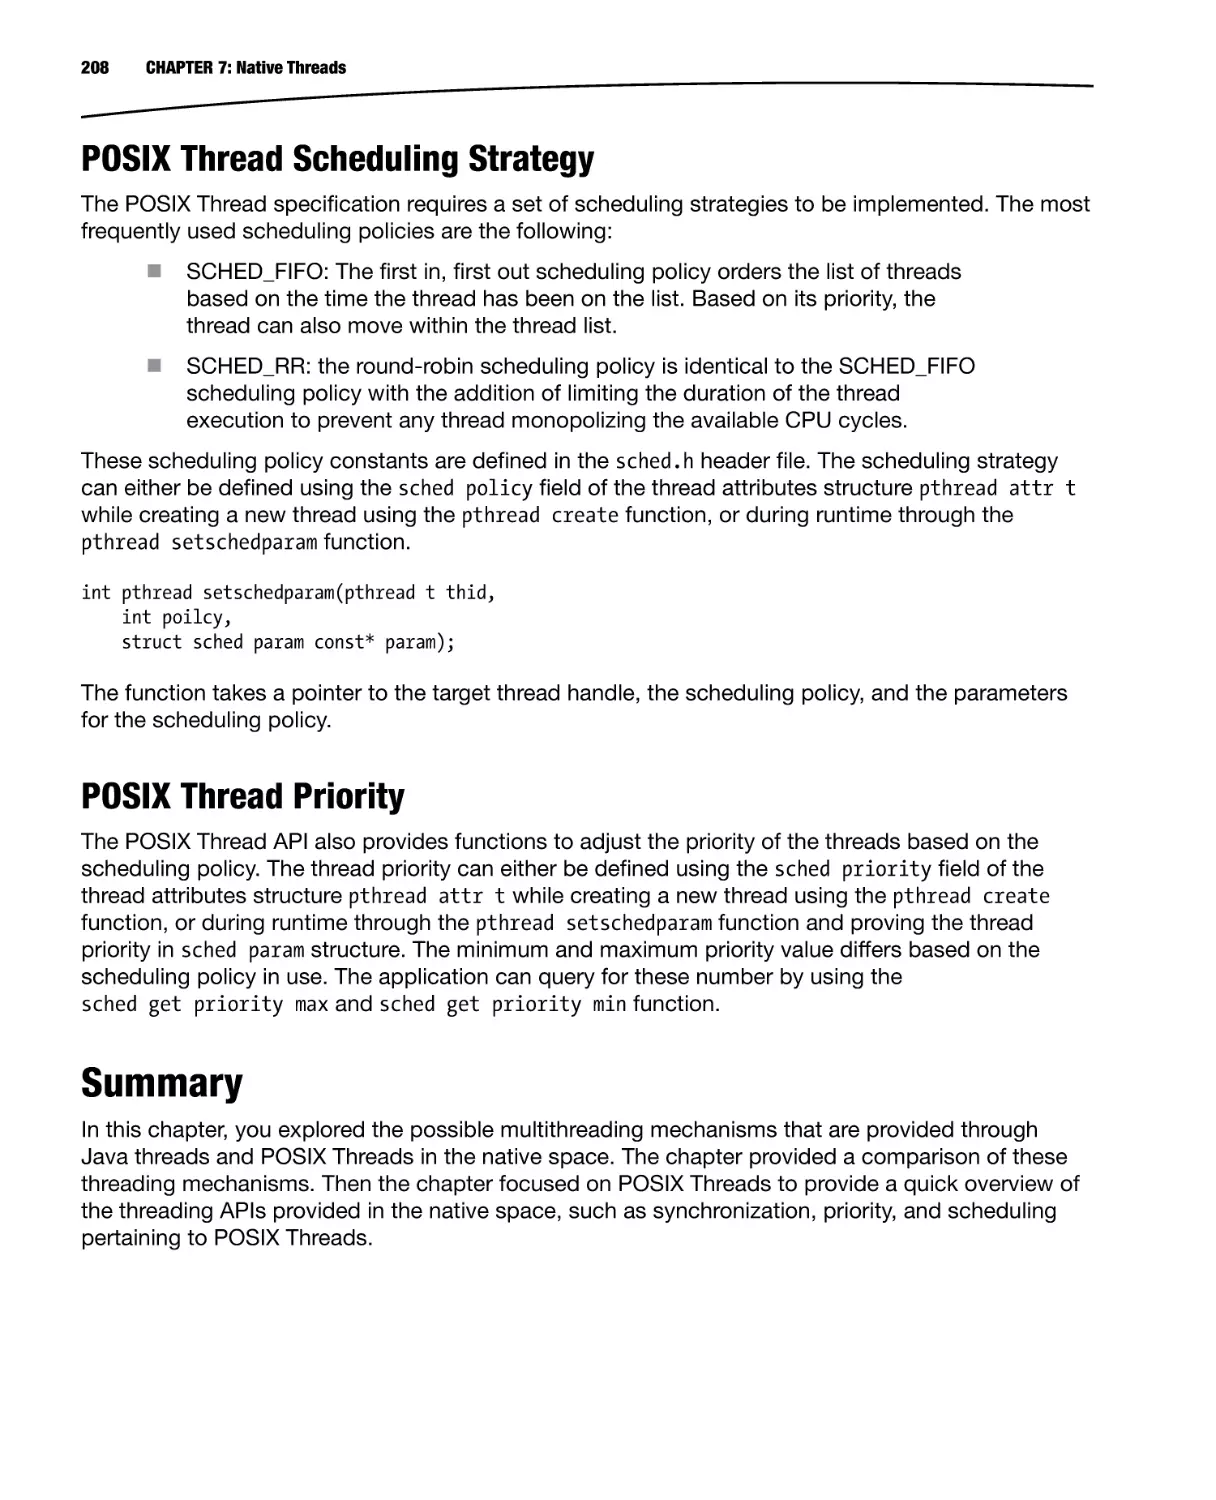 POSIX Thread Scheduling Strategy
POSIX Thread Priority
Summary